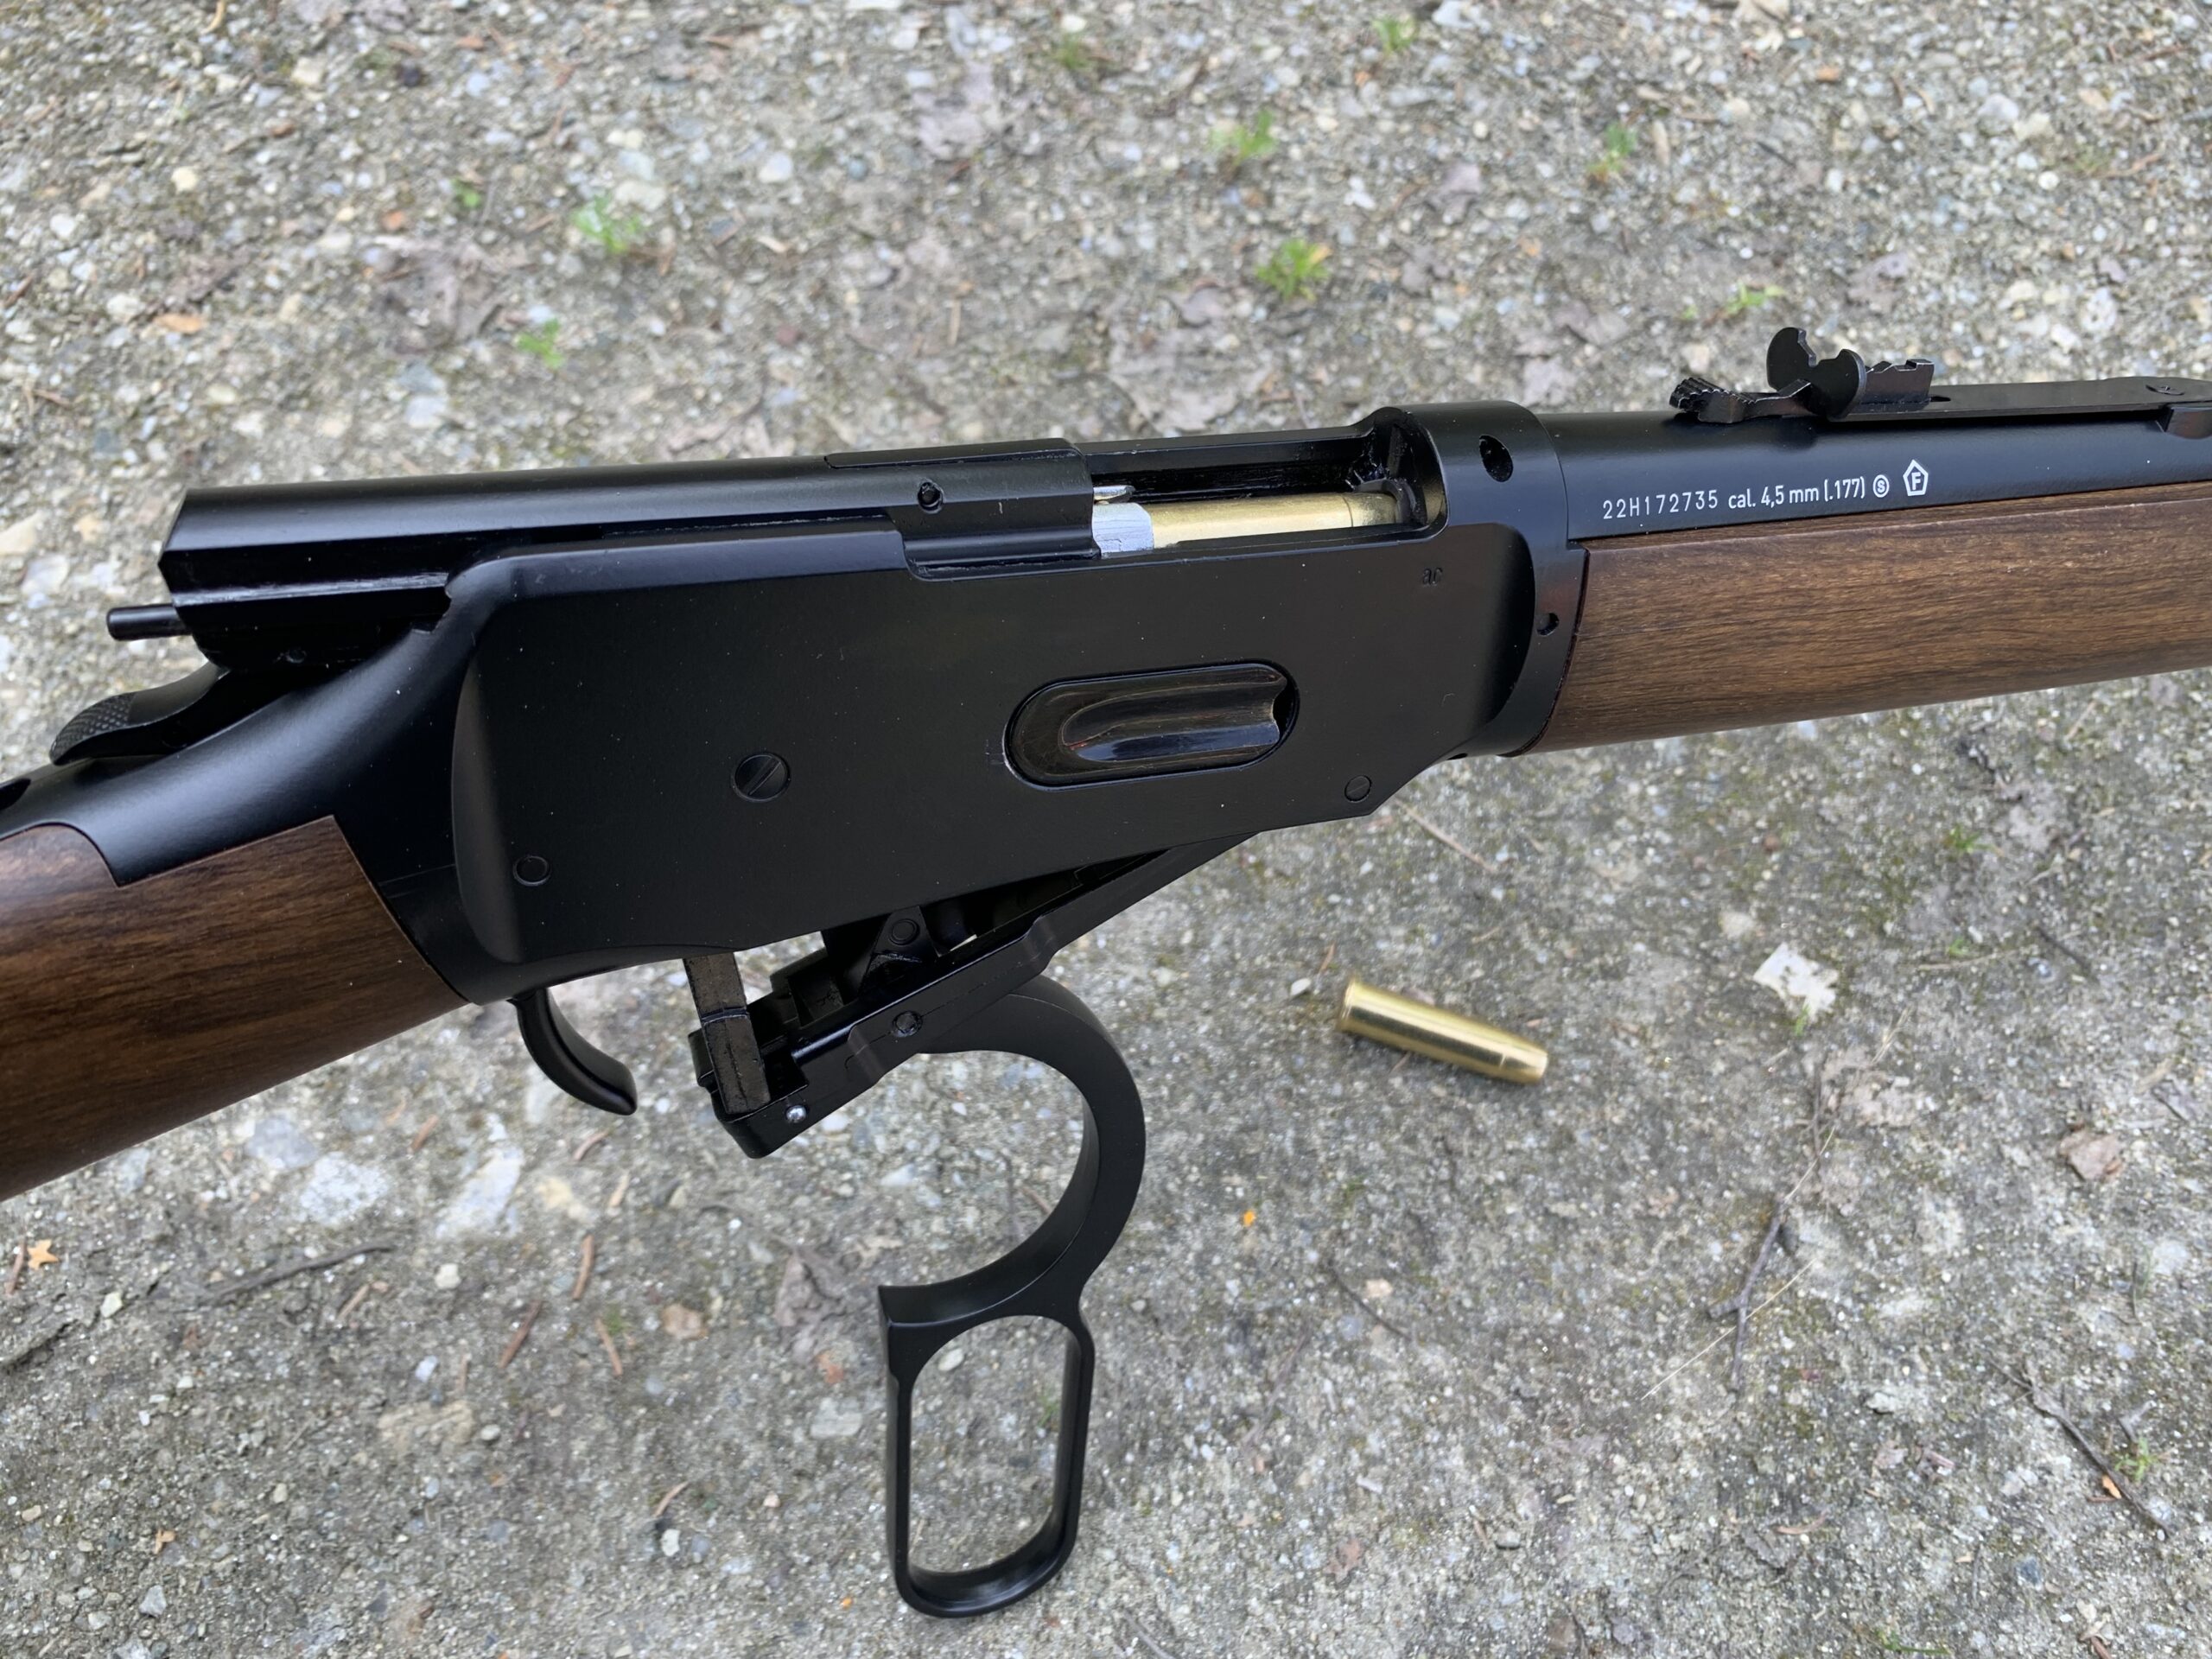 The Umarex Cowboy rifle lever action bb gun.